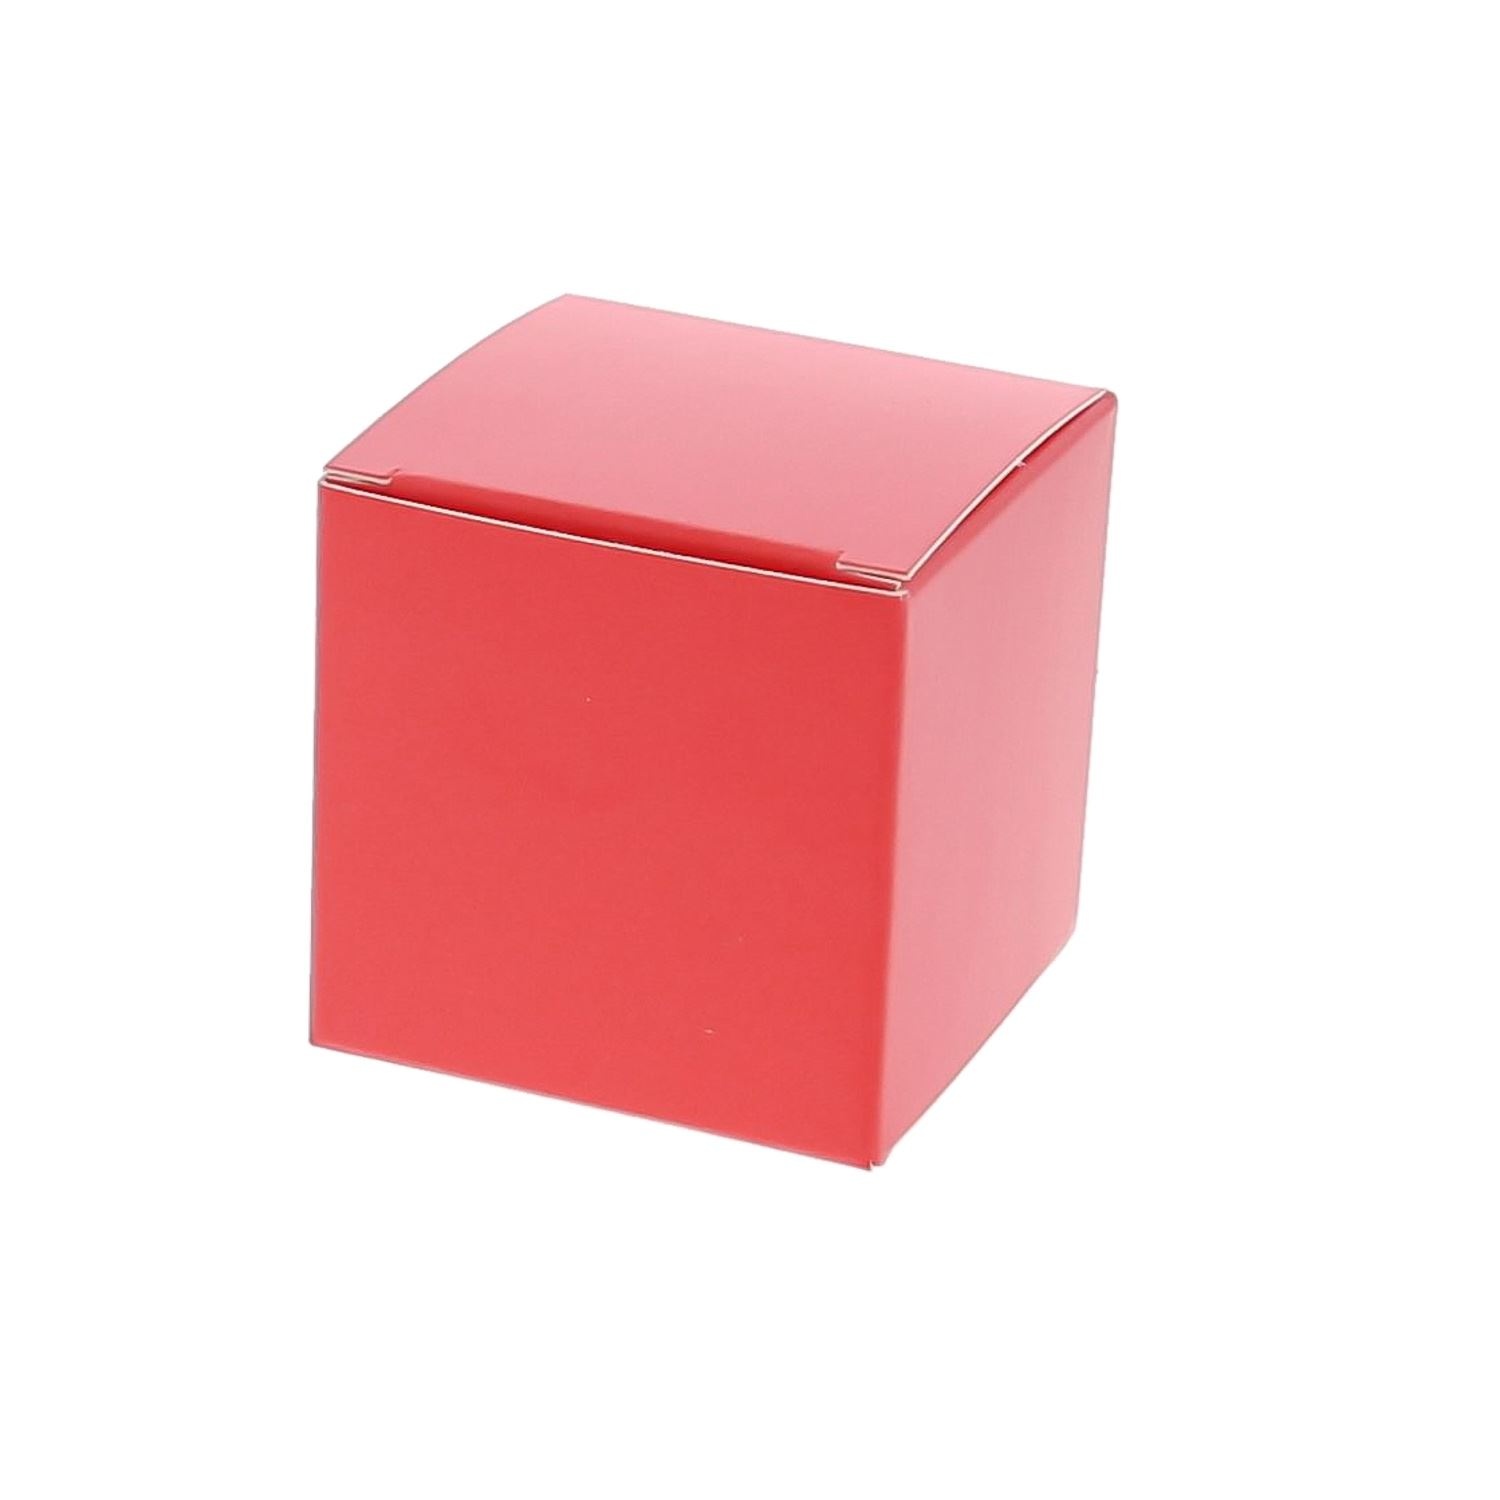 Cube box Red matt - 50*50*50mm -100 pieces